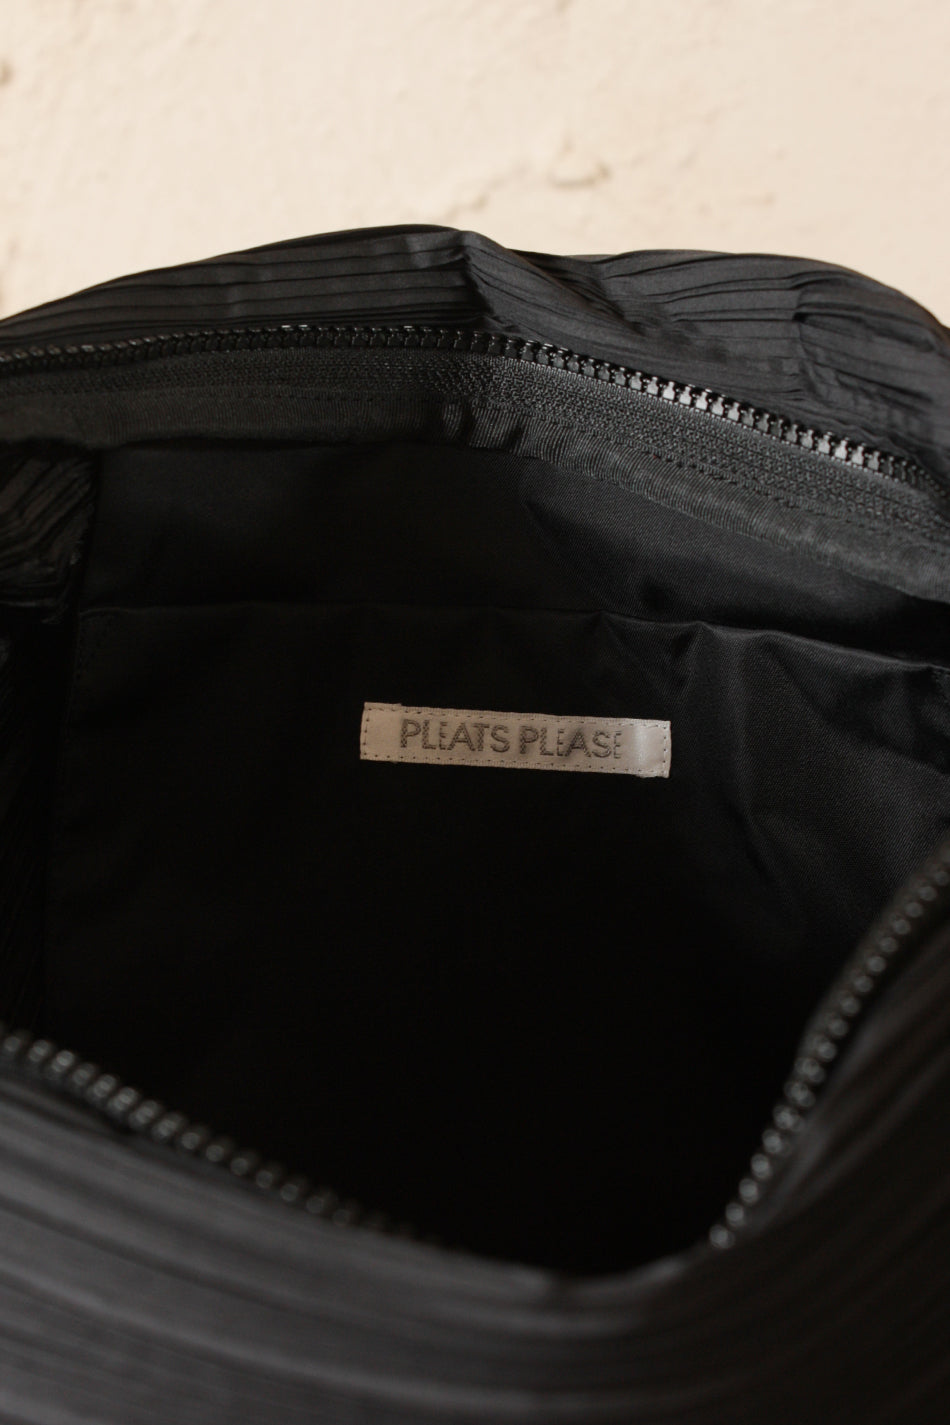 Pleated Carrybag Large Black